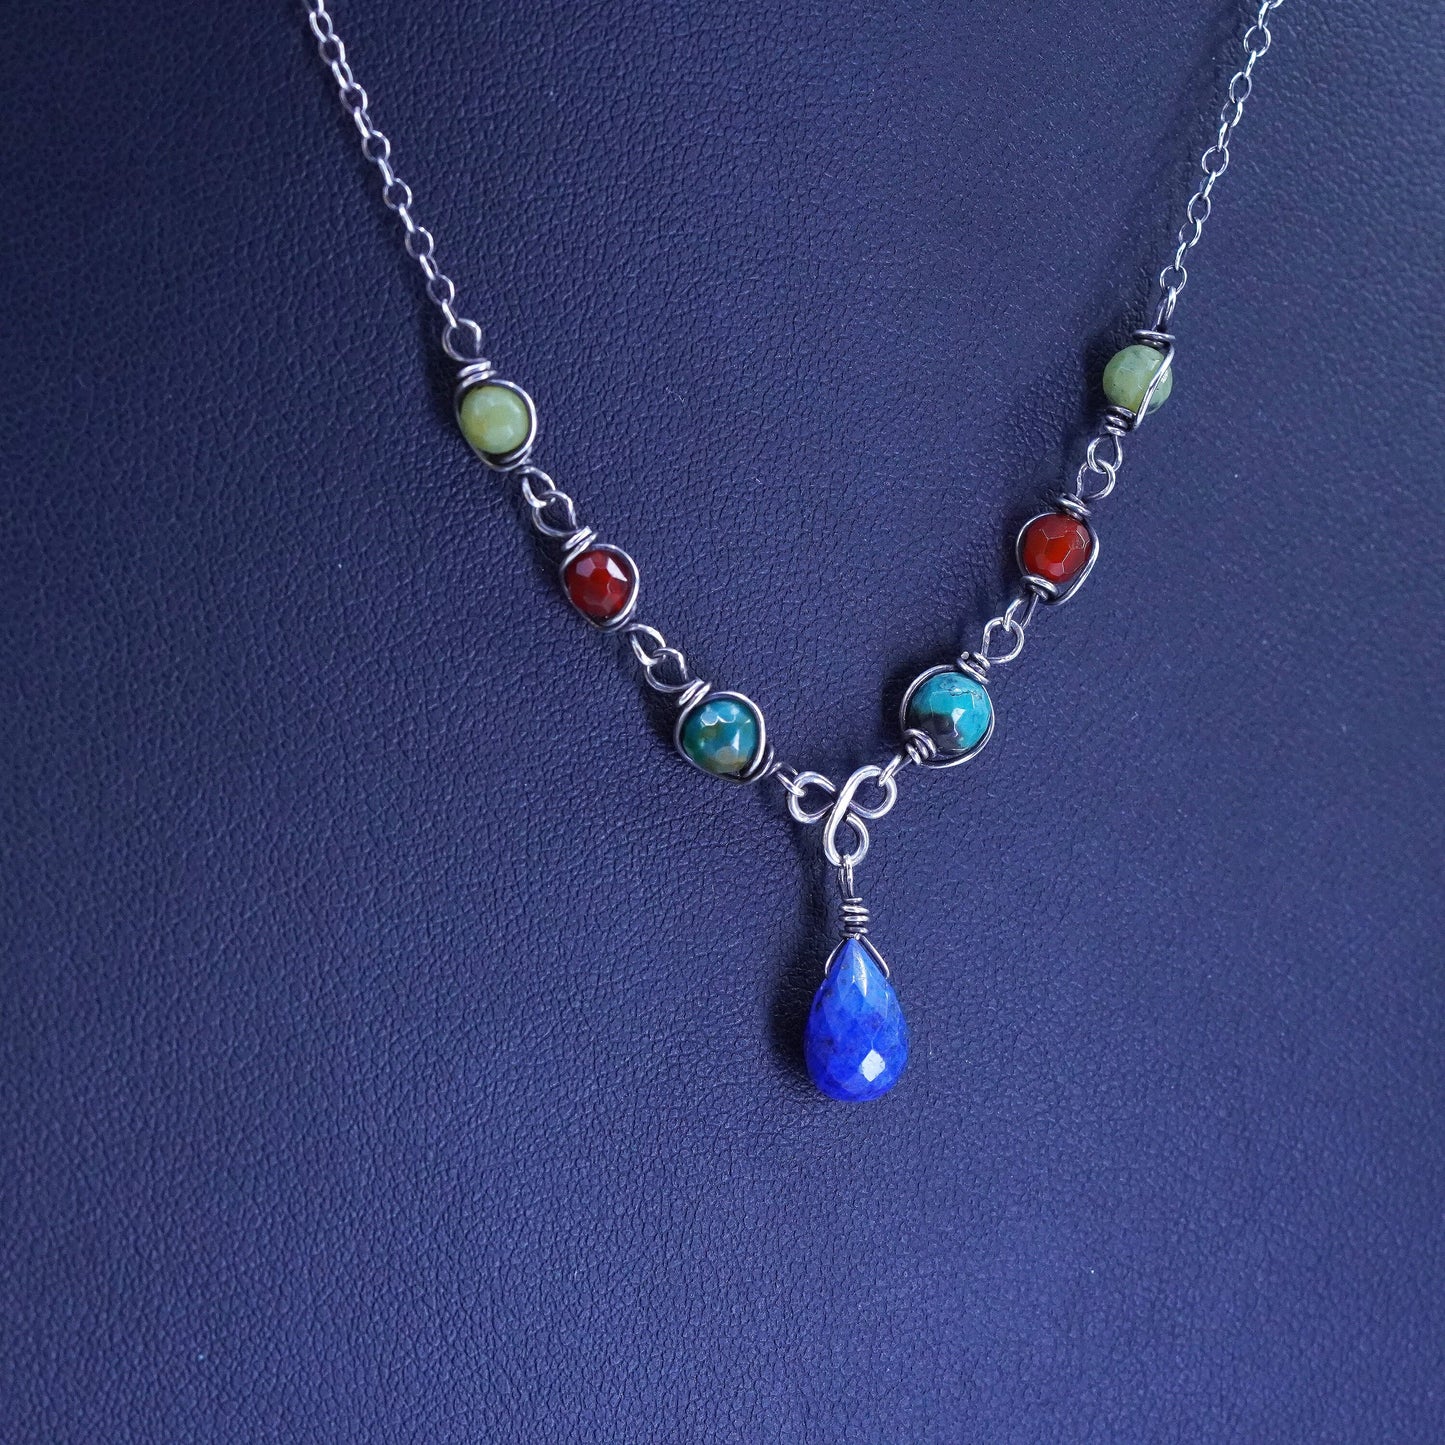 16+1”, VTG sterling silver 925 necklace lapis teardrop pendant jade turquoise